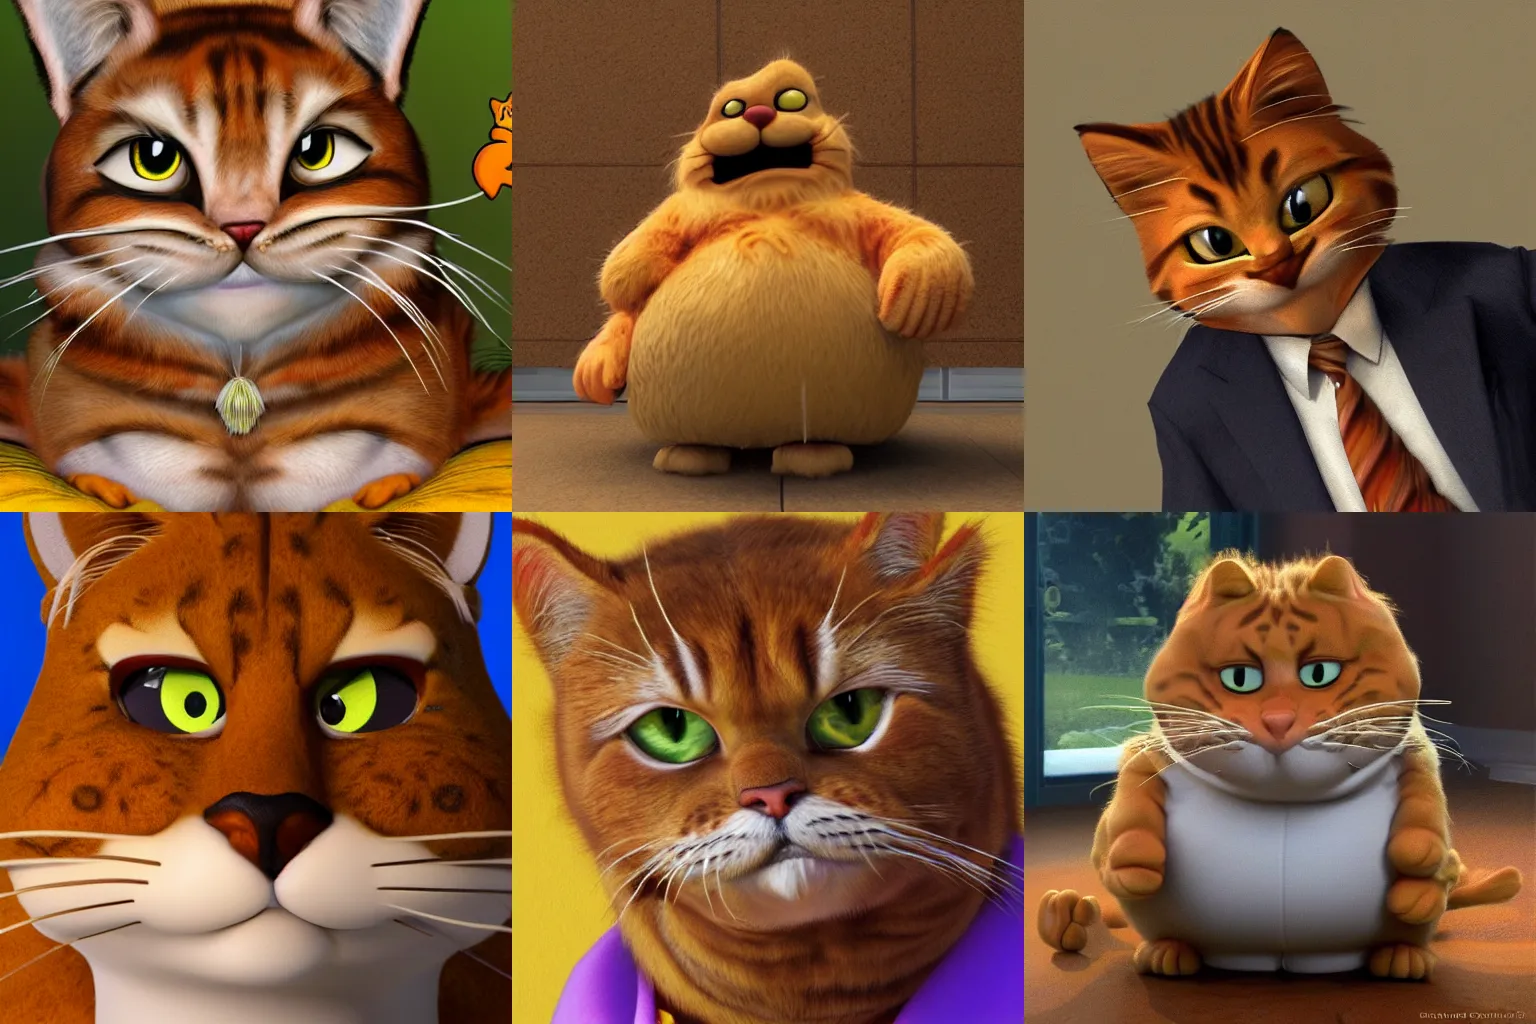 Prompt: Garfield, hyperrealistic